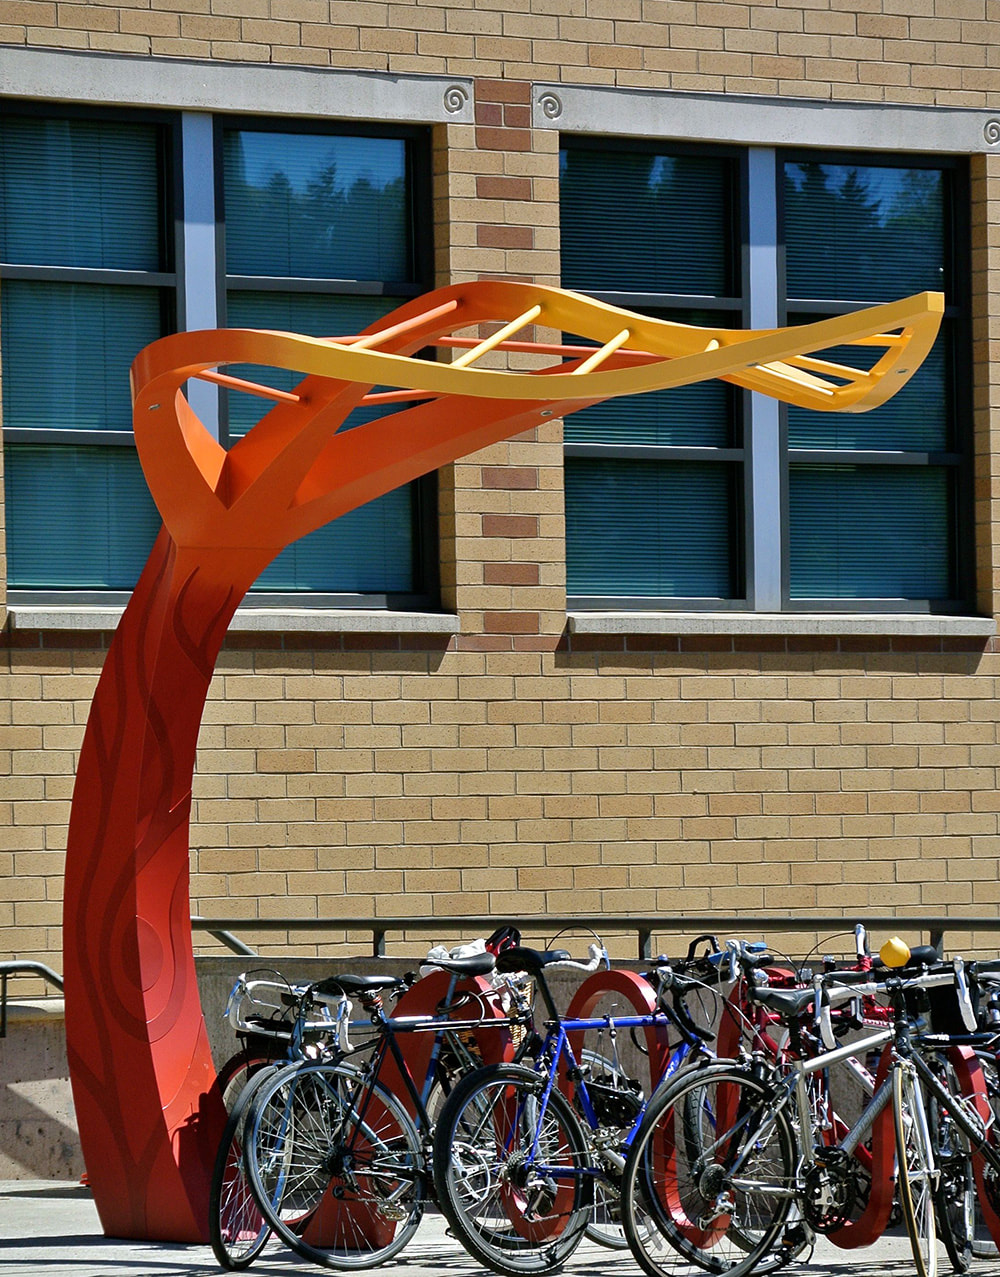 large public art sculpture shaped like a leaf that has a bike rack below it